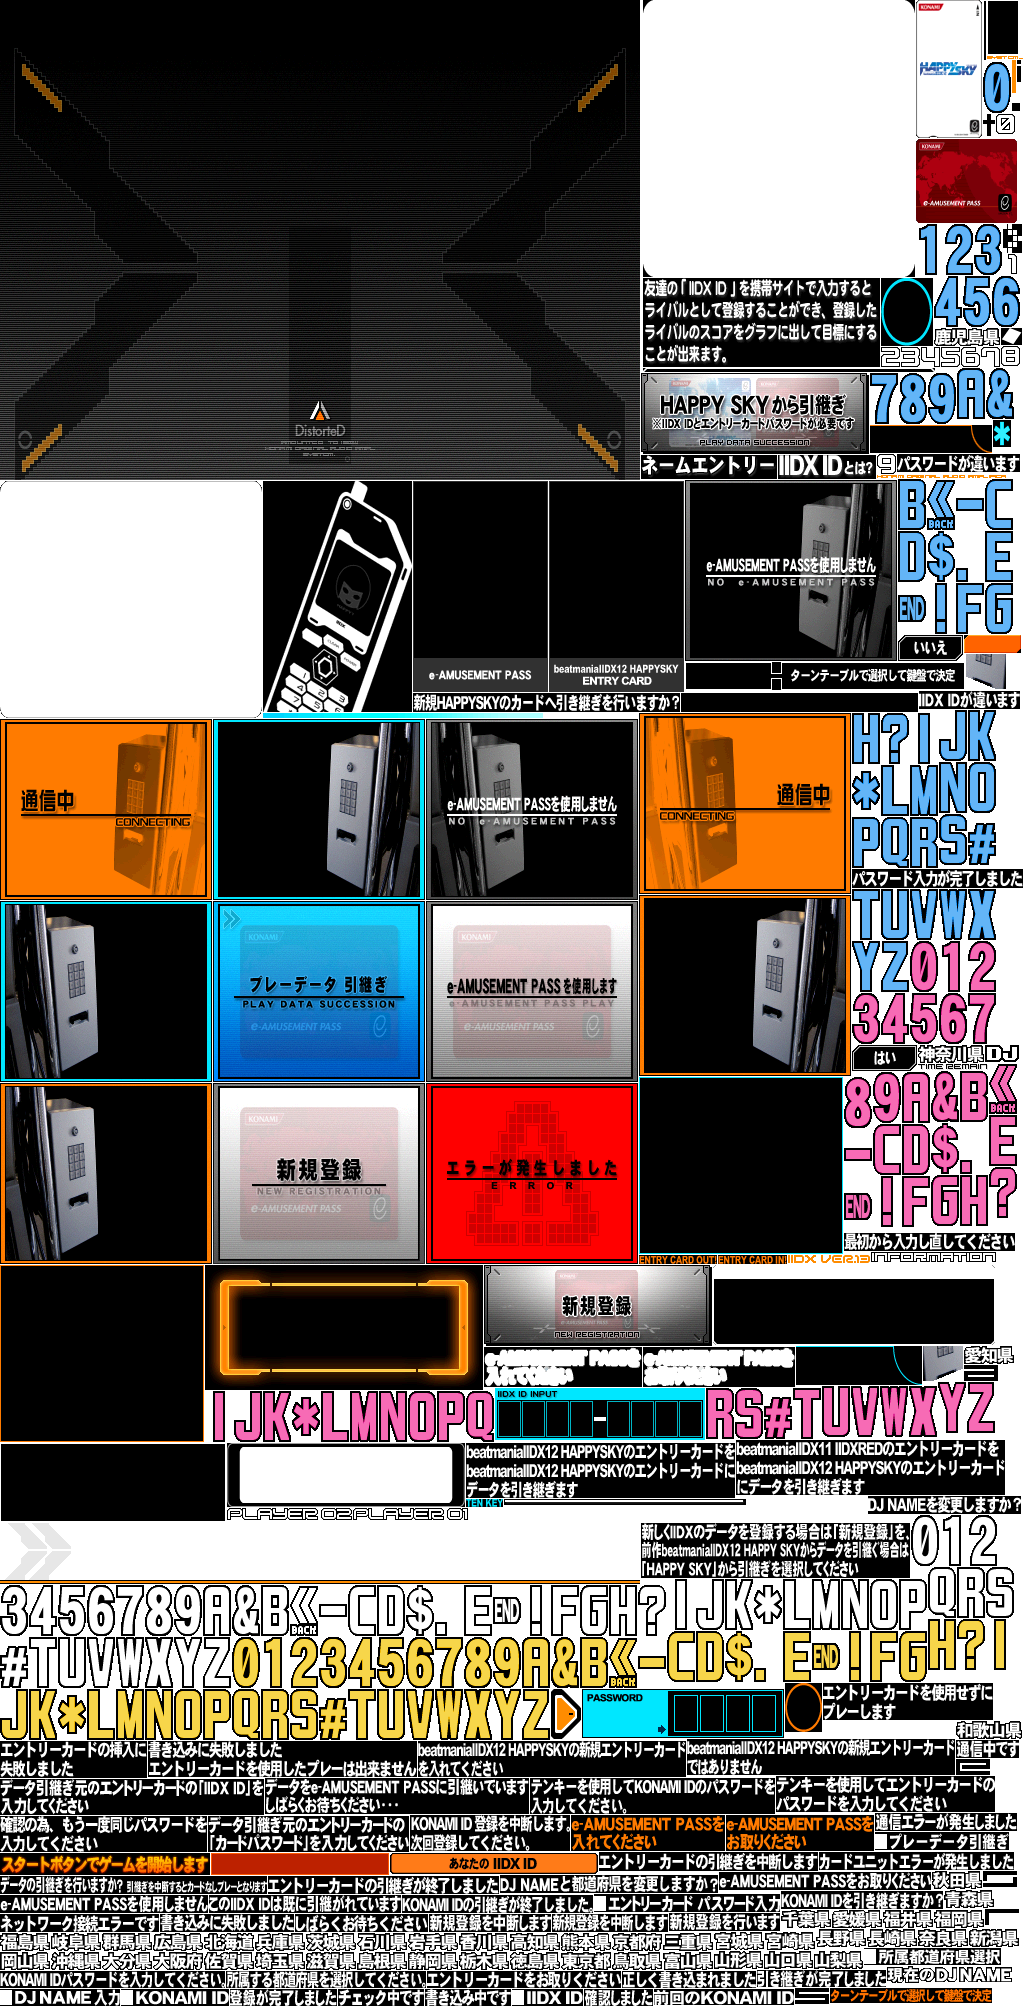 beatmania IIDX Series - Name Entry